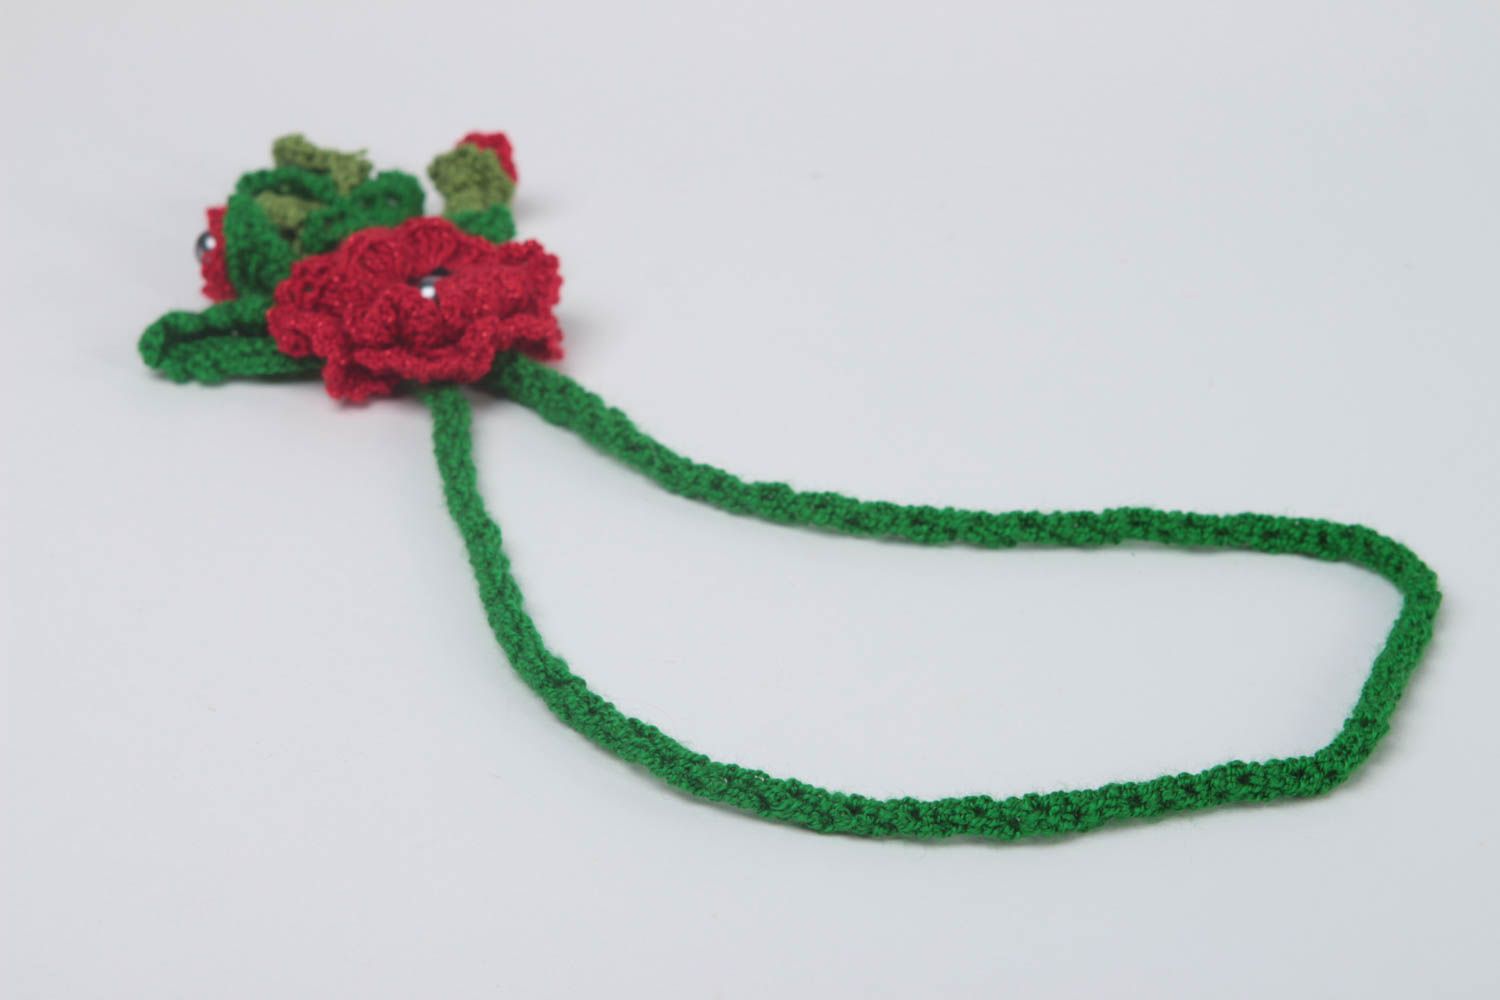 Handmade pendant designer pendant unusual pendant crochet jewelry gift ideas  photo 4